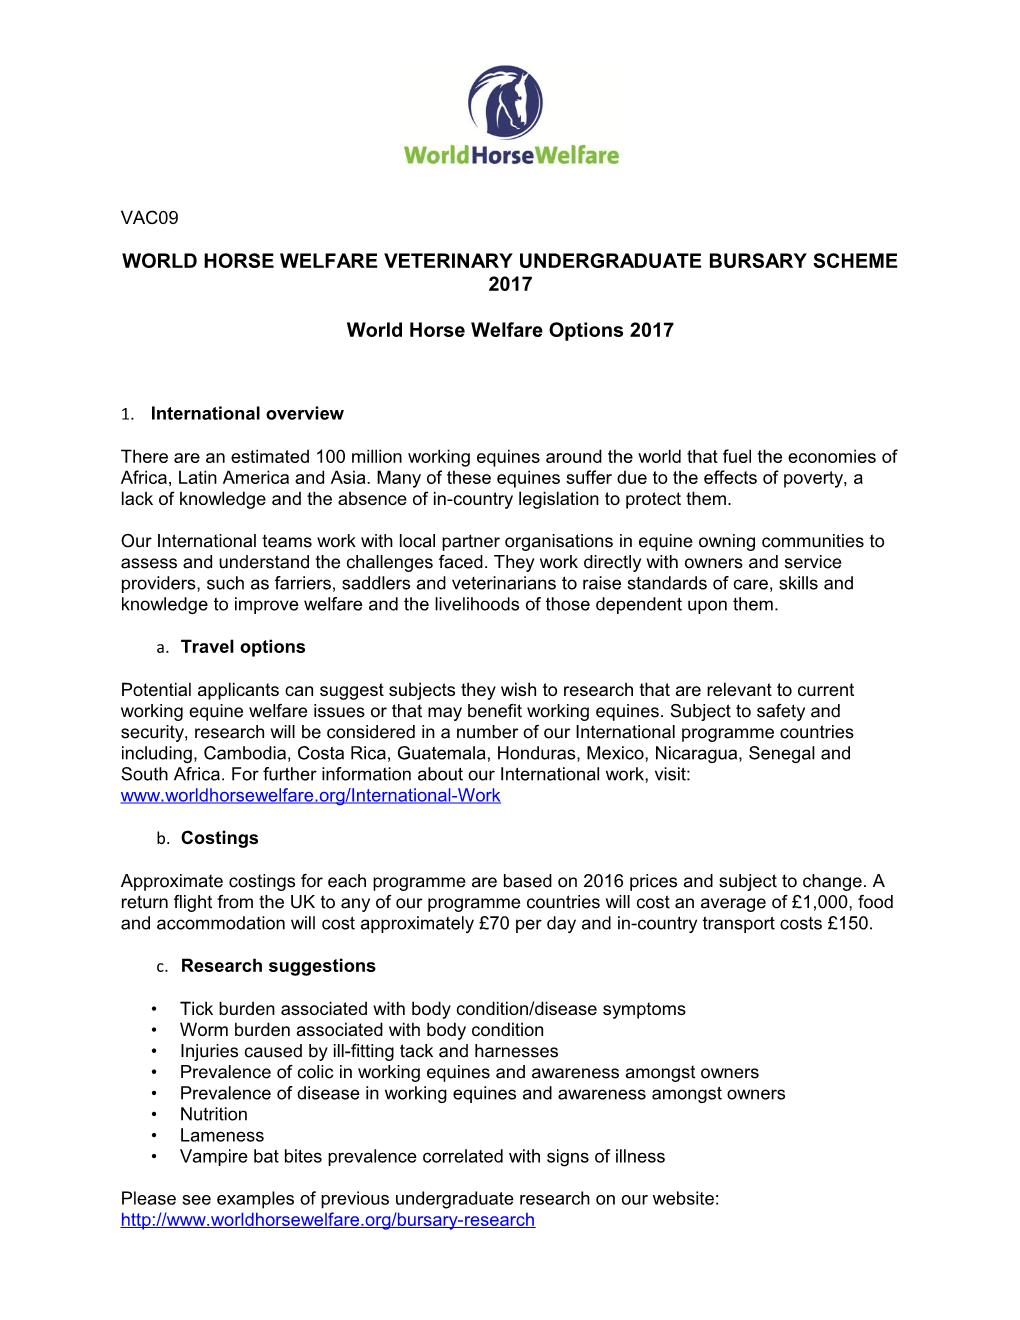 World Horse Welfare Veterinary Undergraduate Bursary Scheme 2017